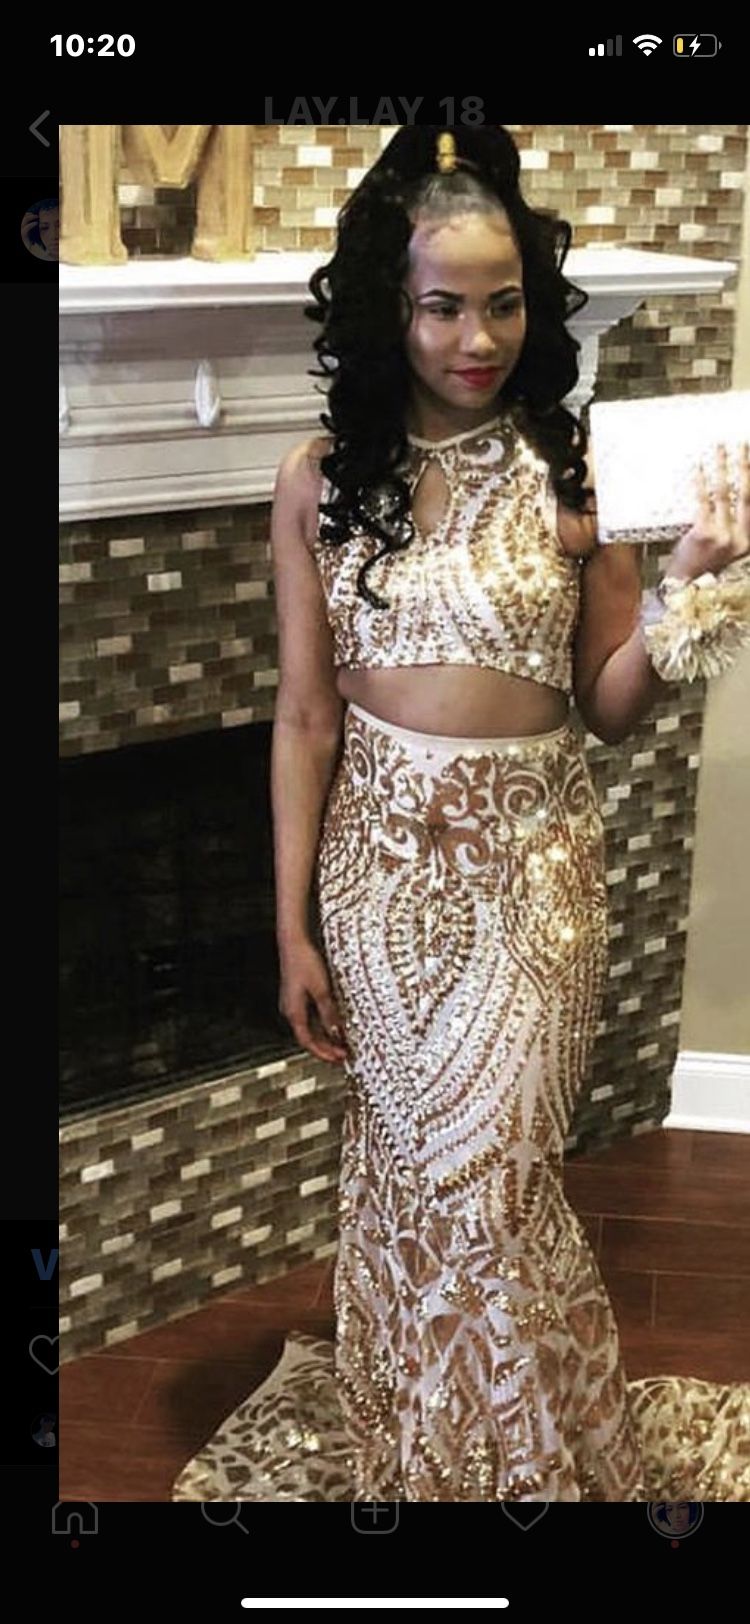 Gold prom dress